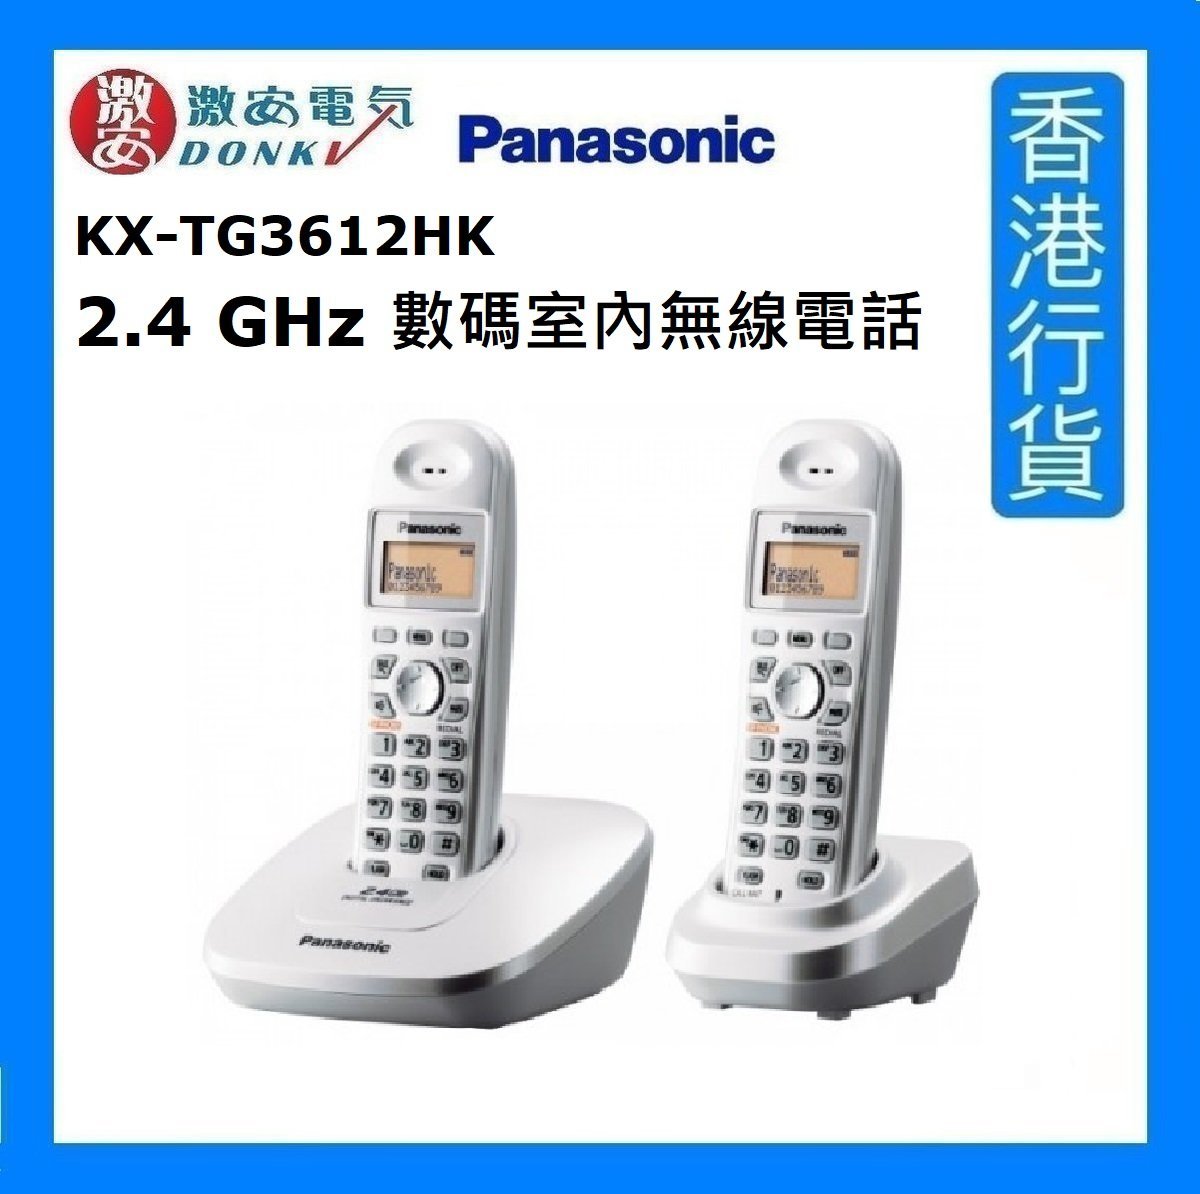 KX-TG3612HK 2.4 GHz 數碼室內無線電話 雙子機組合 - 珍珠白色 [香港行貨]